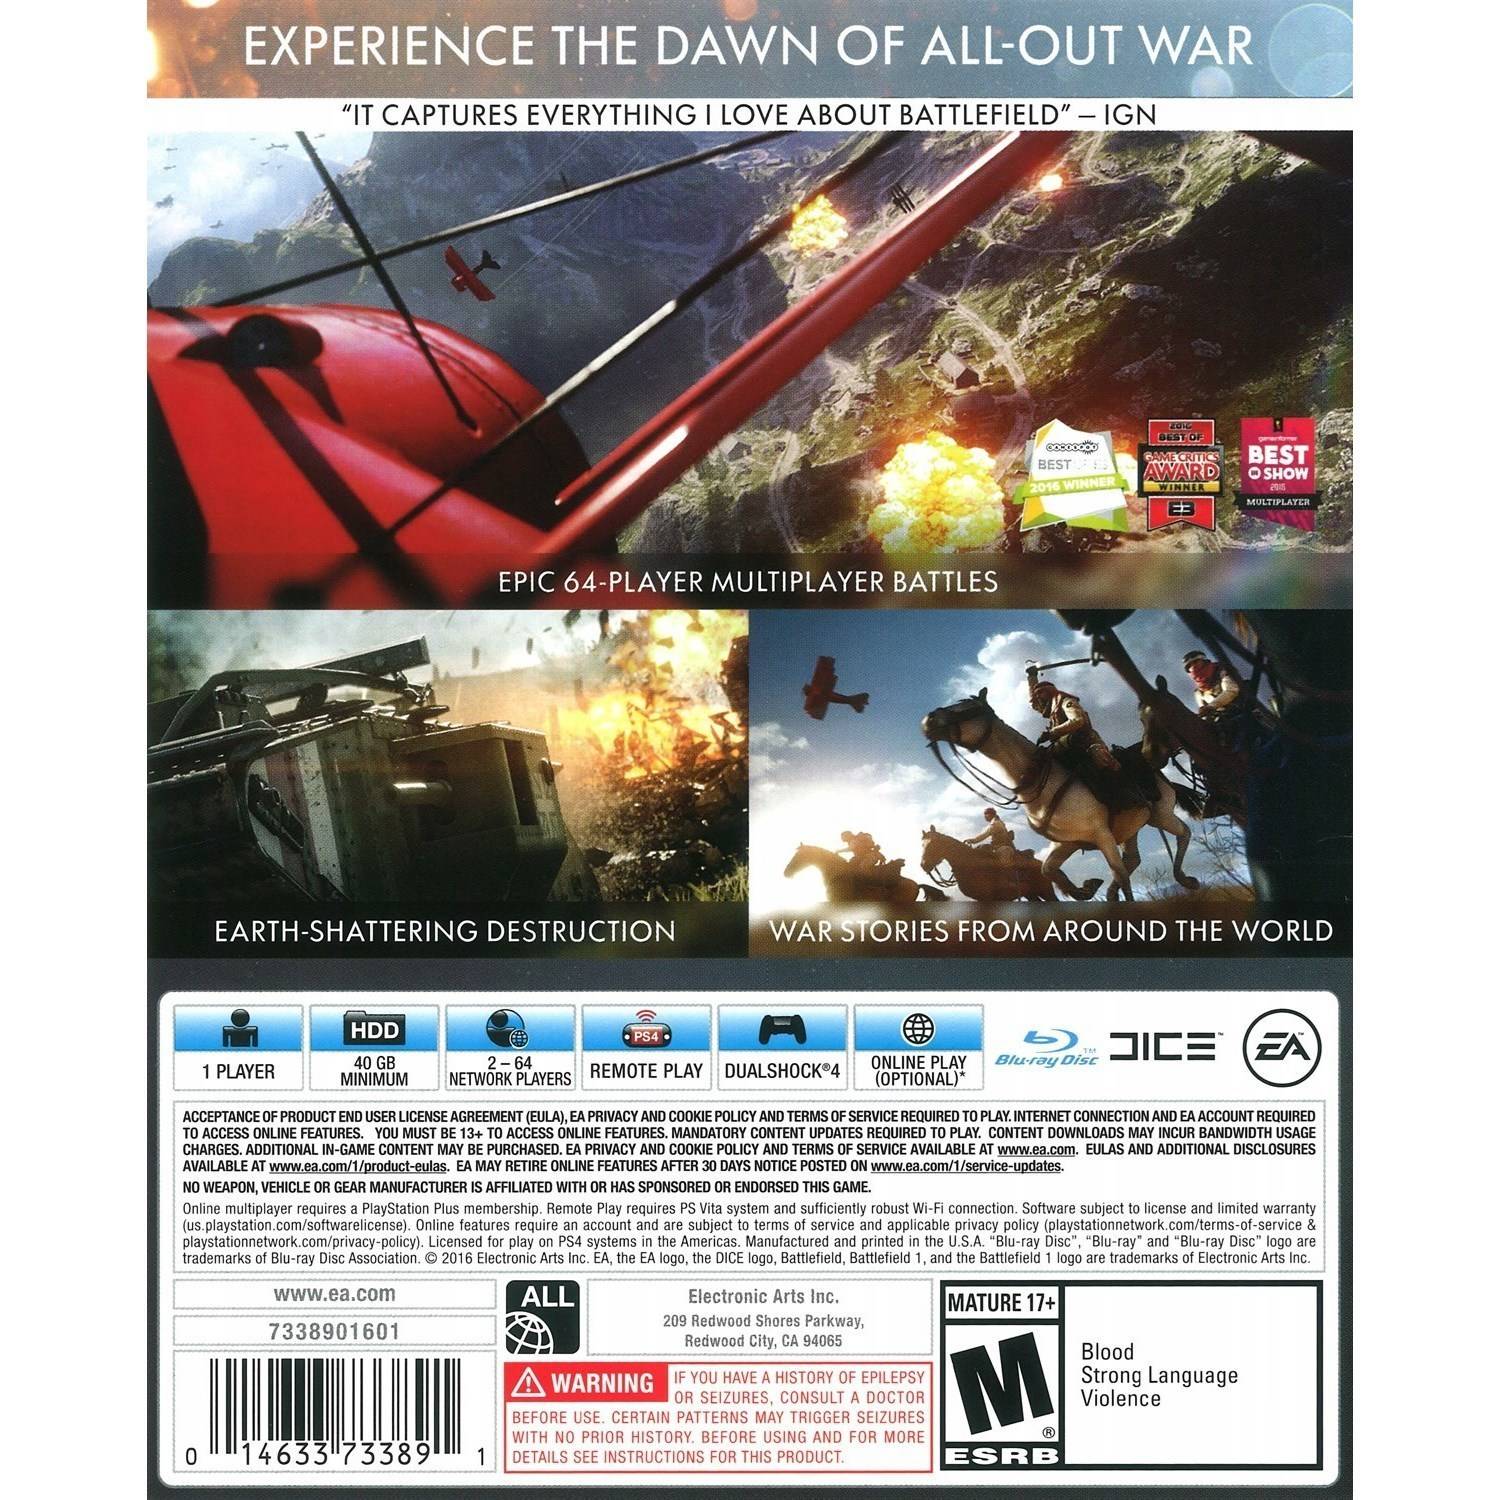 Battlefield 1 (Used/PS4) | Game Grid - Logan